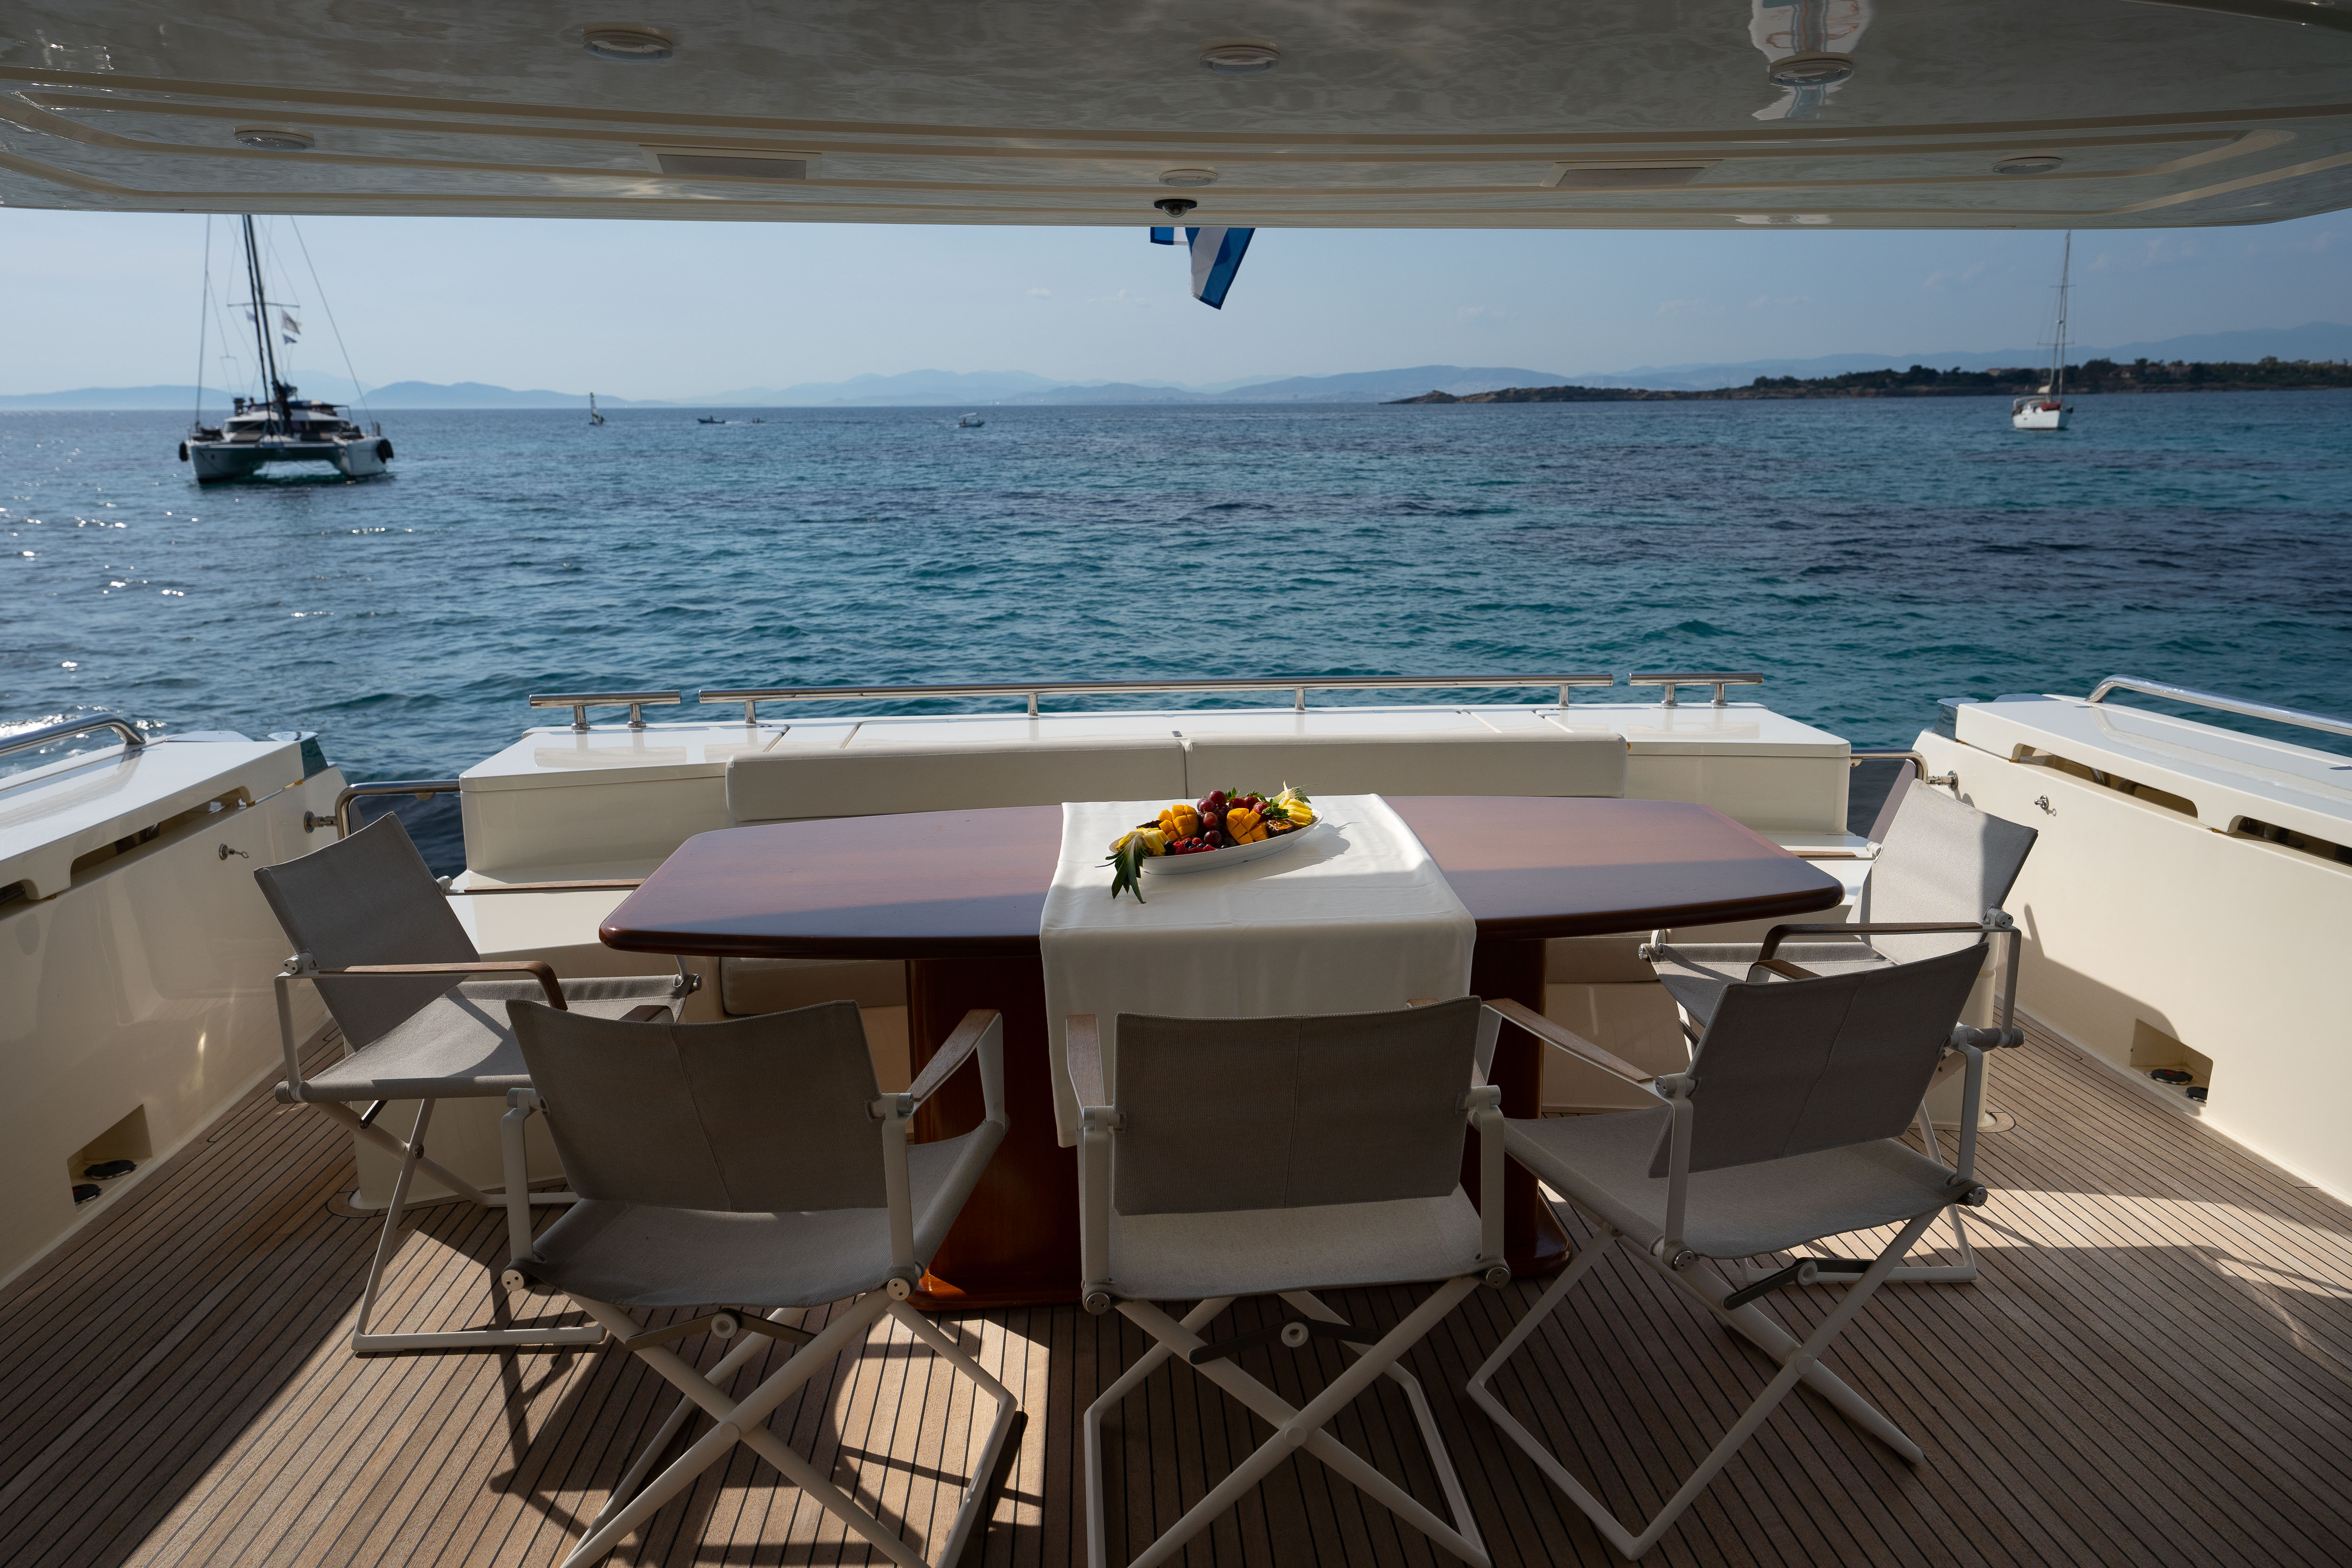 Ferretti 780 - Superyacht charter St Martin & Boat hire in Greece Athens and Saronic Gulf Athens Hellinikon Agios Kosmas Marina 5